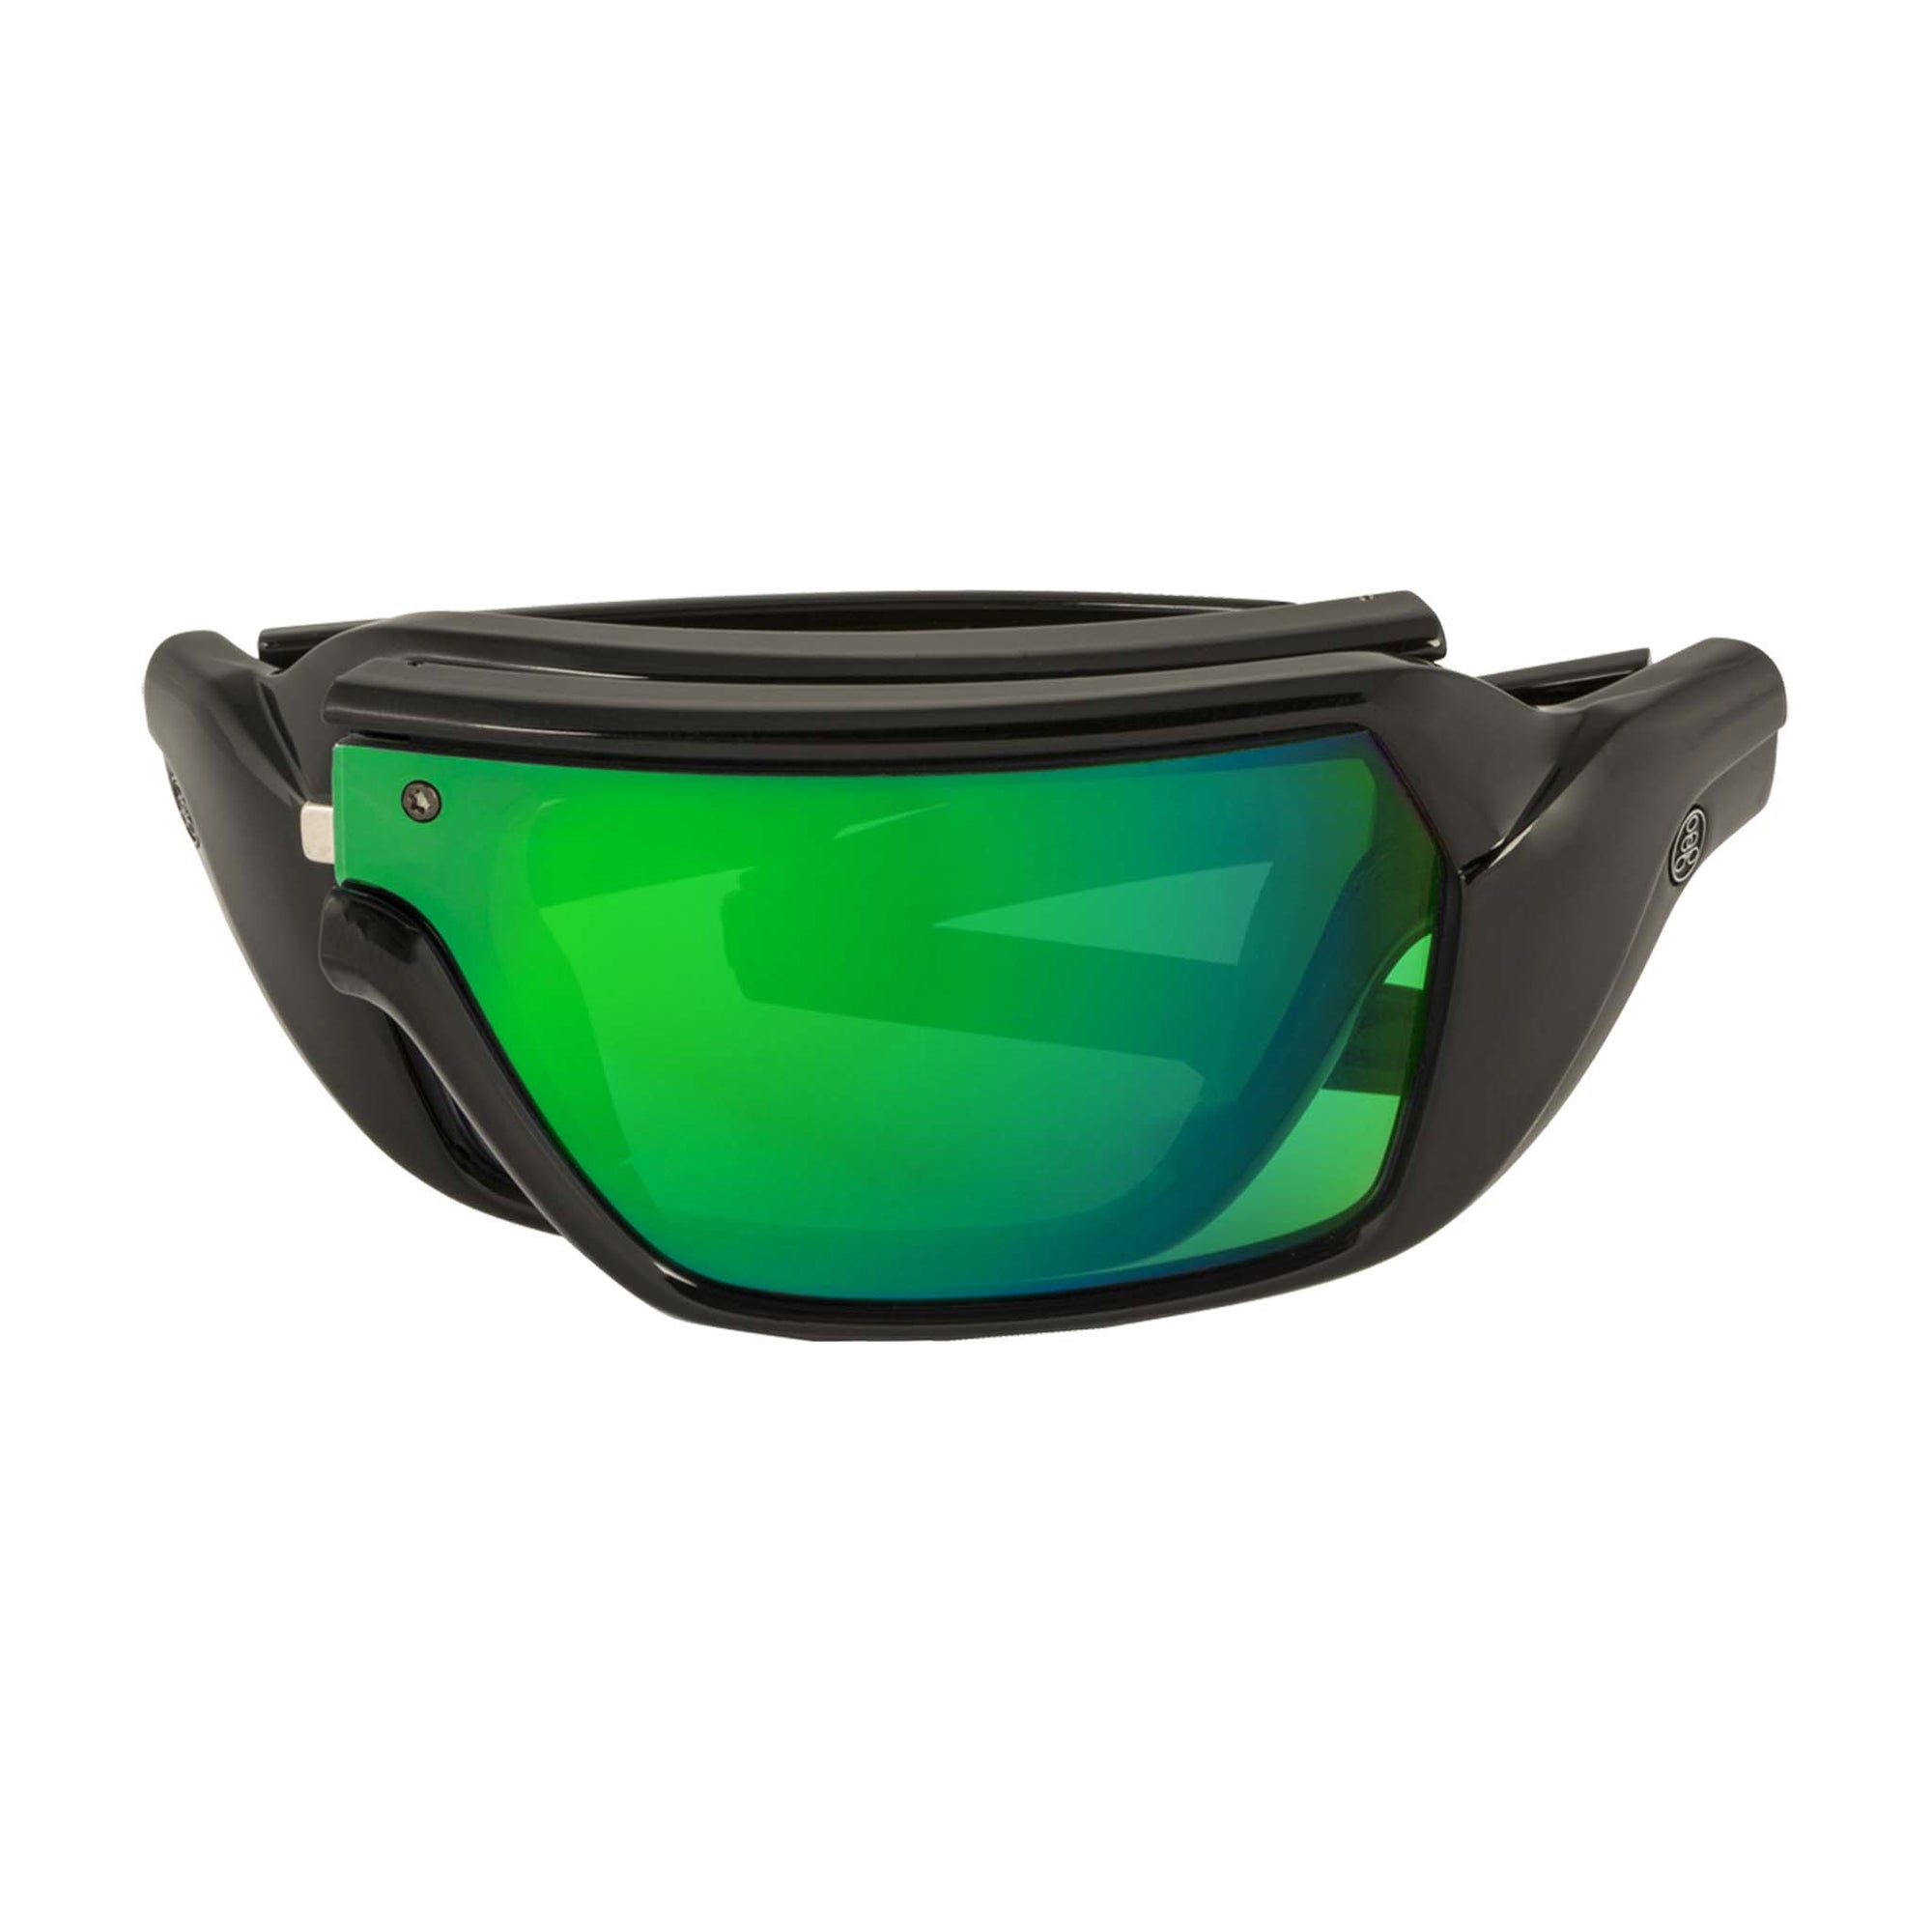 Popticals, Premium Compact Sunglasses, PopStorm, 010060-BGEO, Standard Sunglasses, Gloss Black Frame, Gray Lenses w/Green Mirror Finish, Compact View